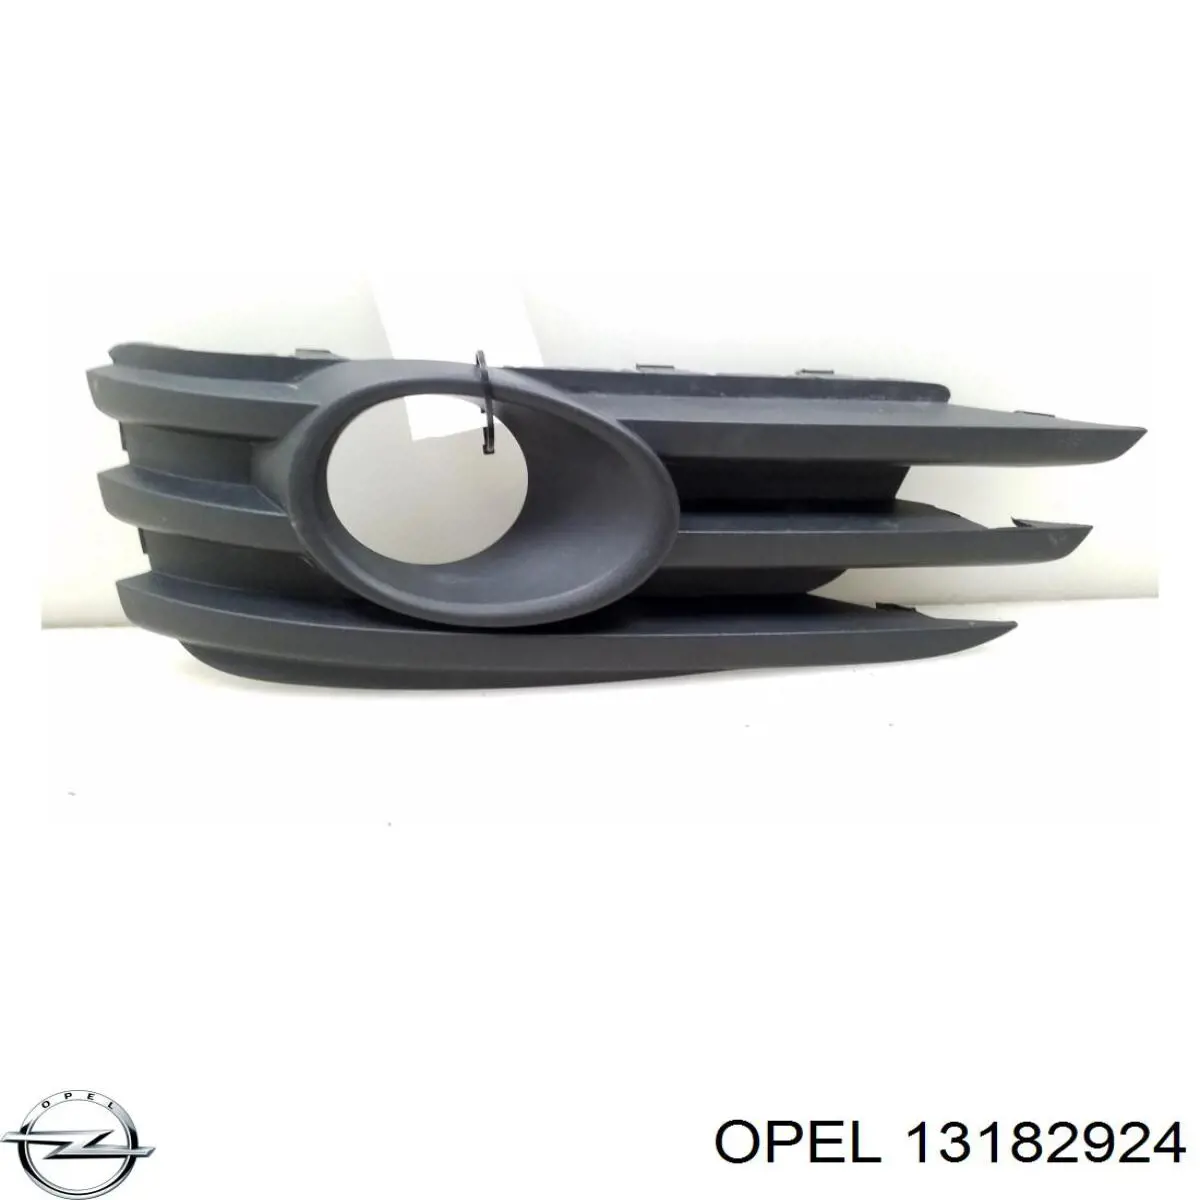 13182924 Opel заглушка (решетка противотуманных фар бампера переднего левая)